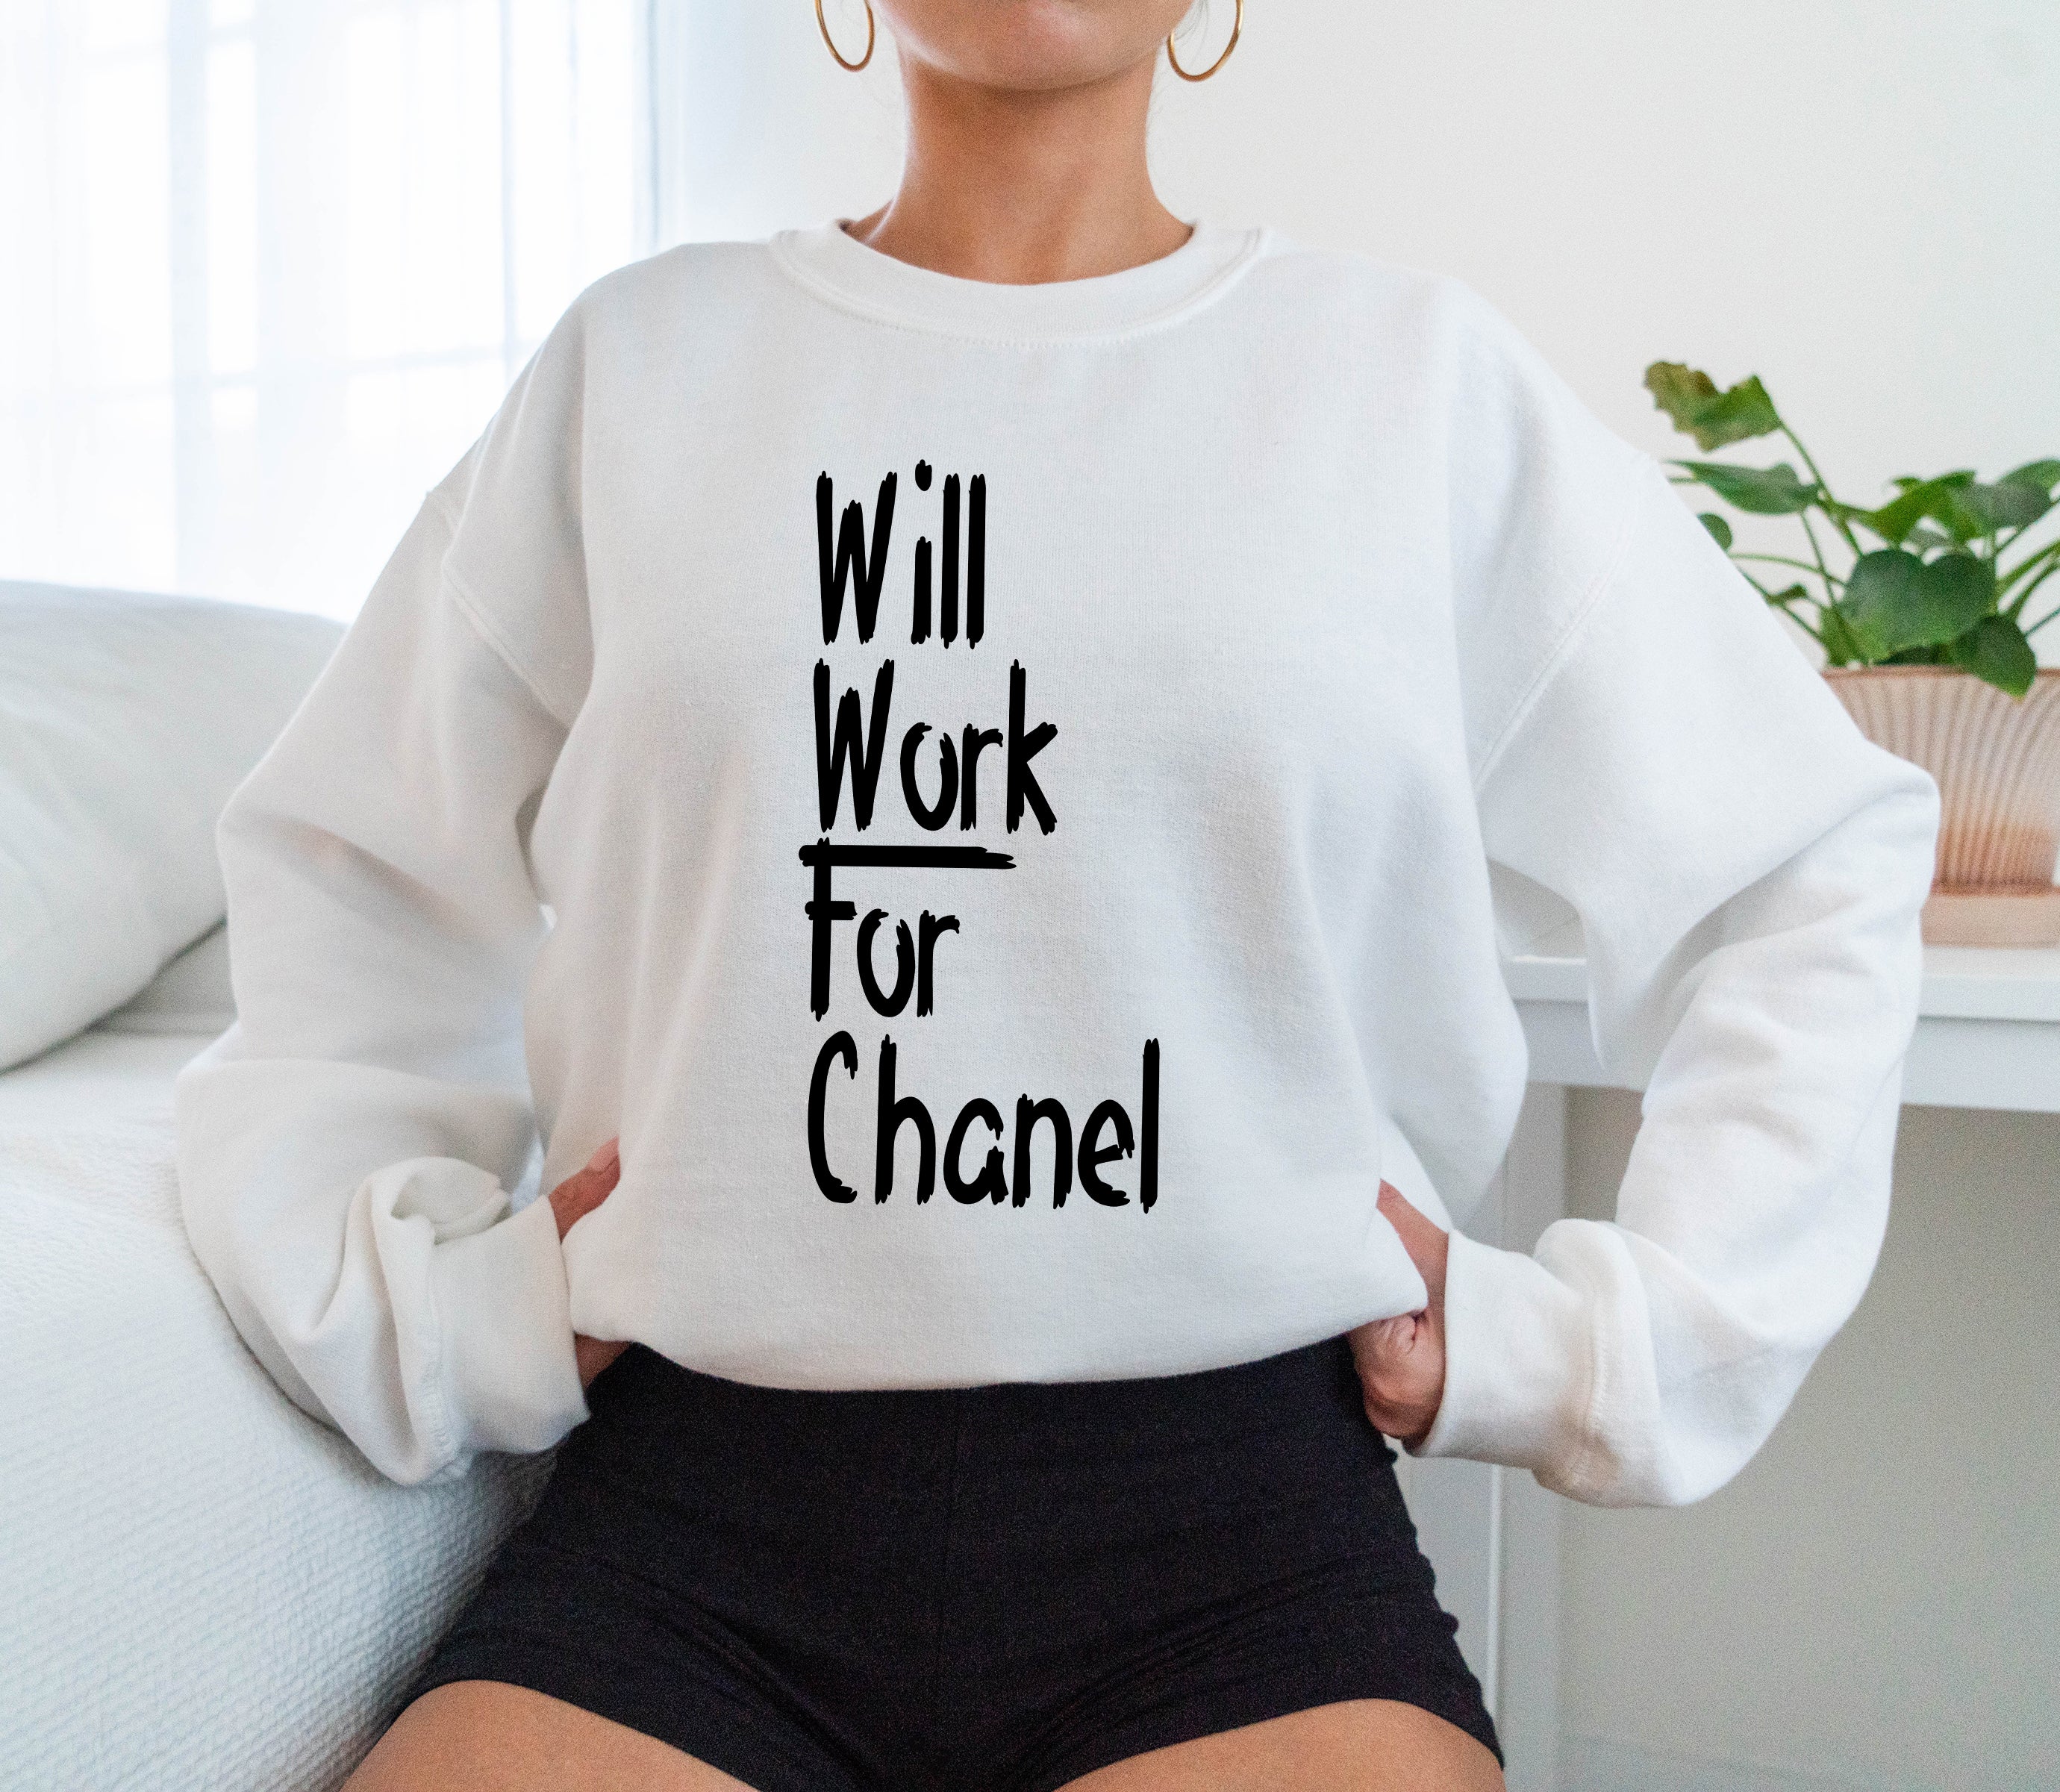 coco chanel sweatshirts for women logo